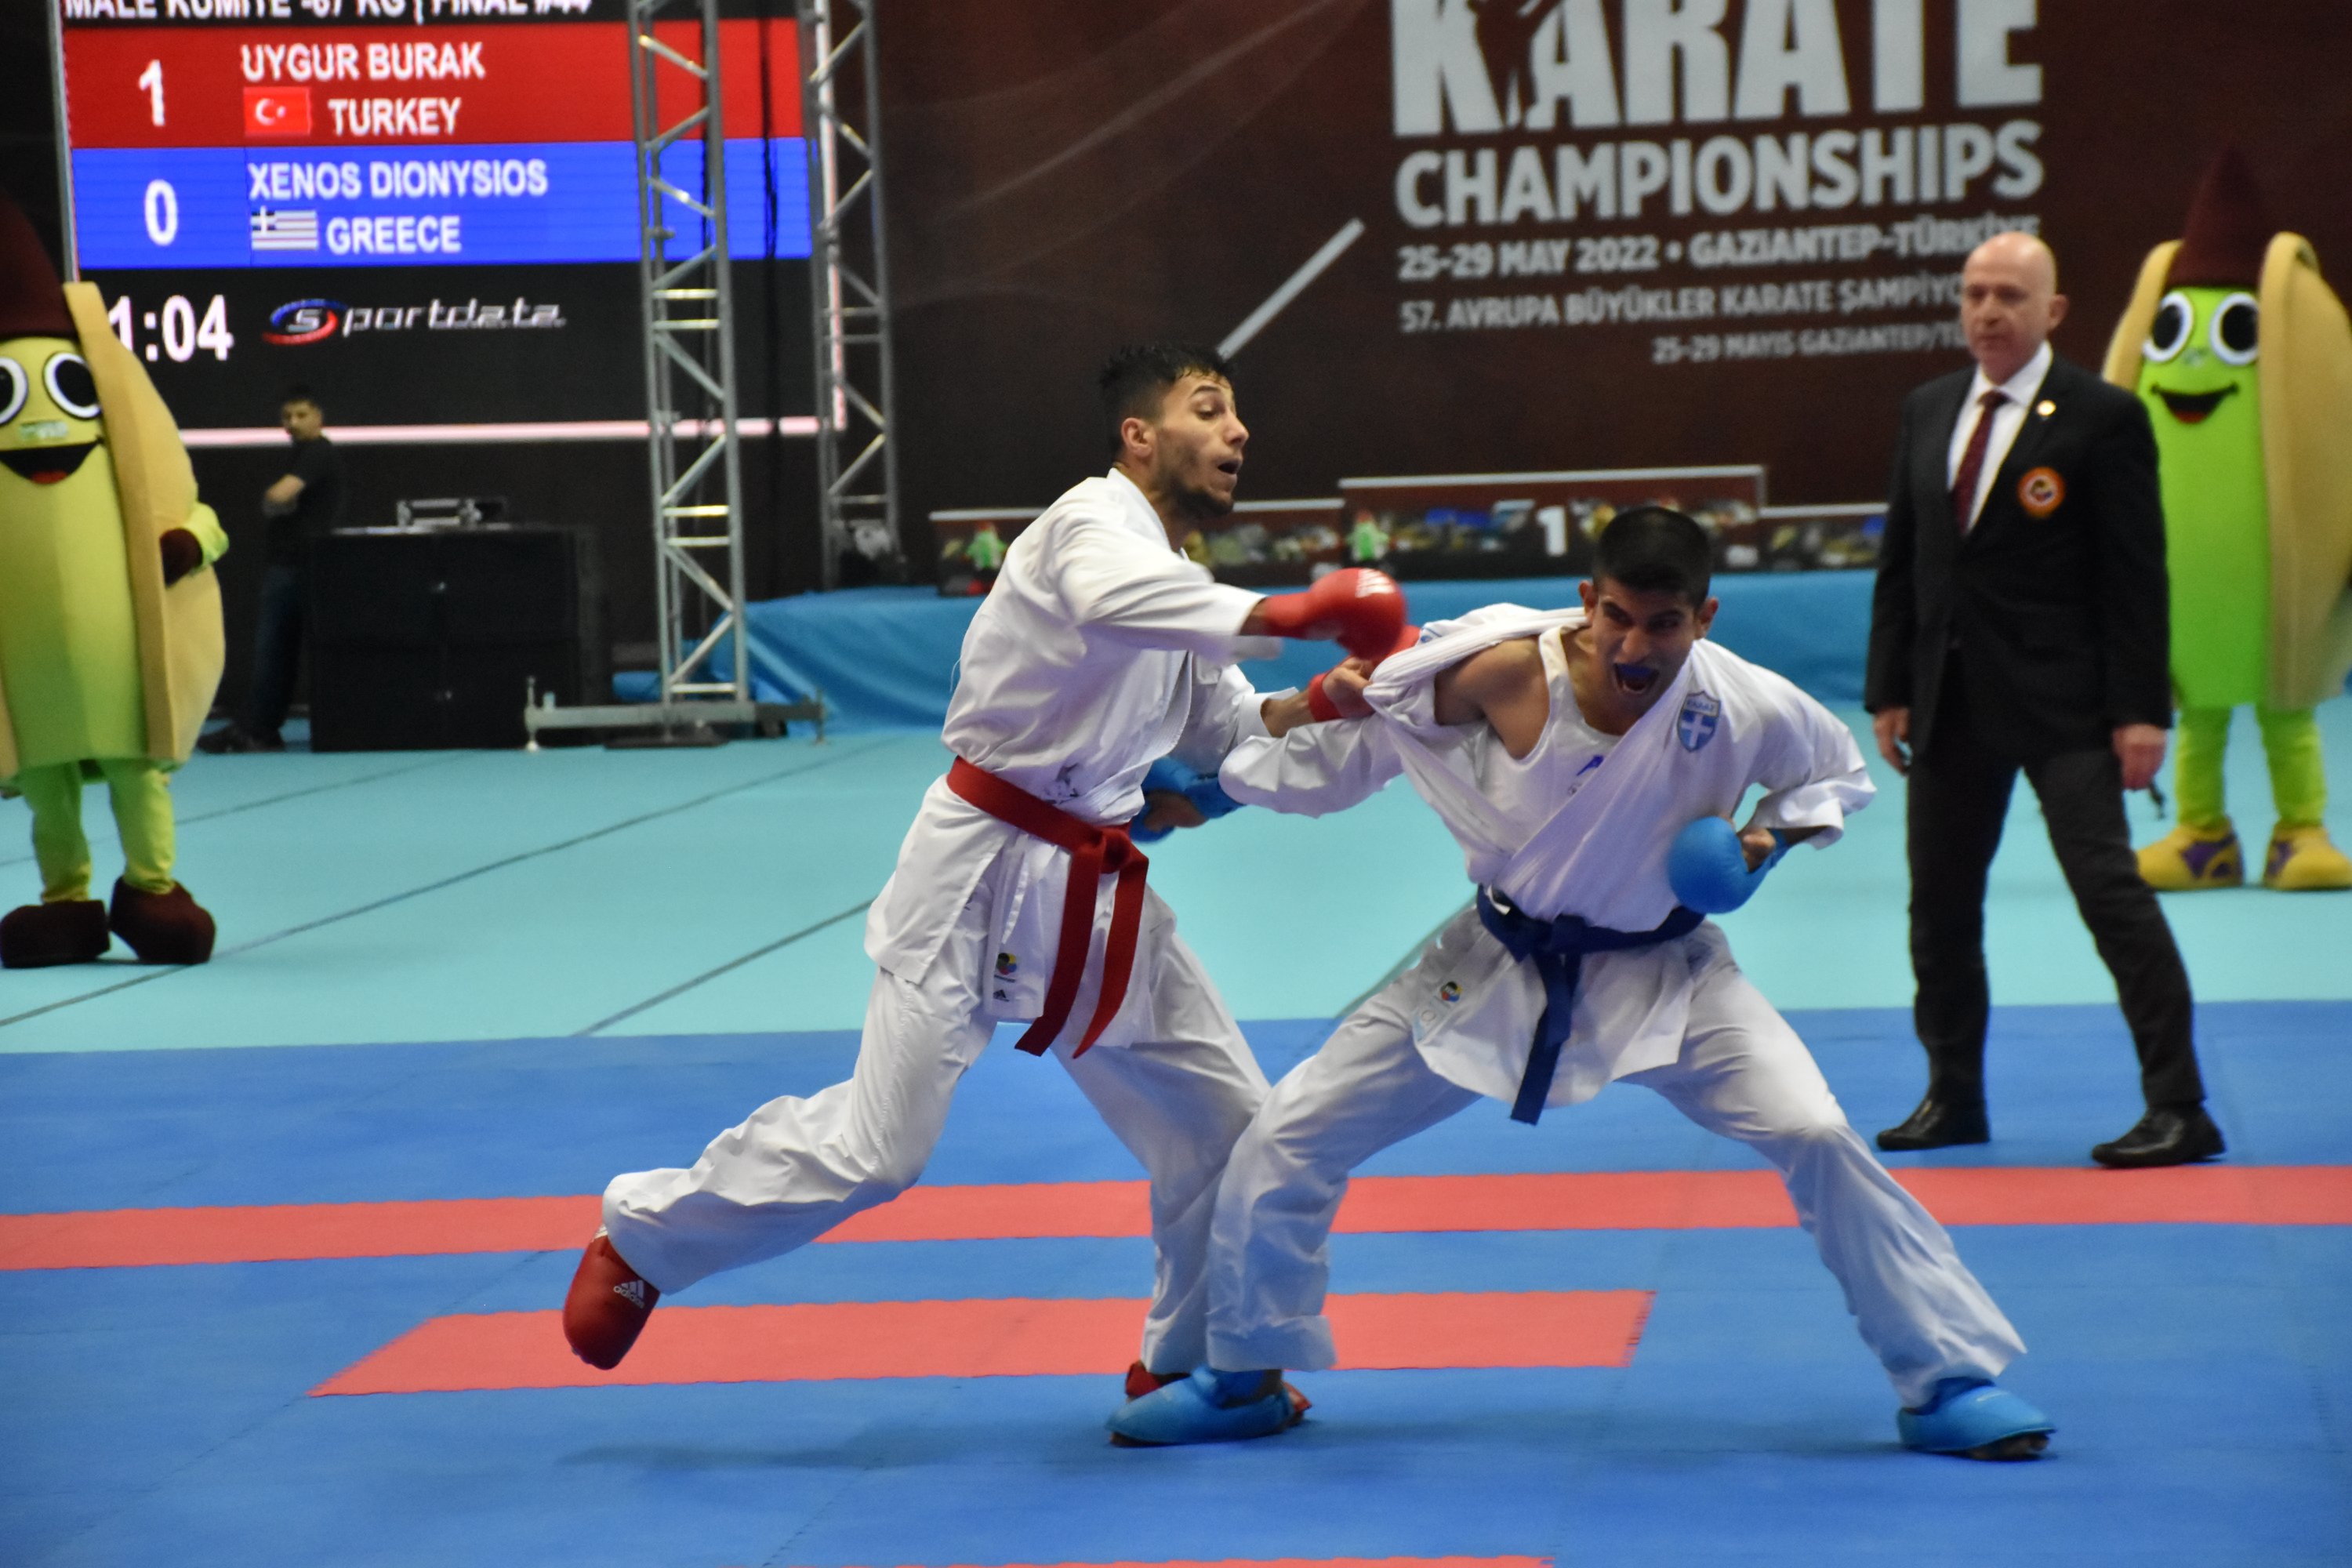 Eray amdan (kiri) mengalahkan lawannya untuk memenangkan medali emas, saat Turki memenangkan 6 emas dan 1 perak pada hari Sabtu di Kejuaraan Karate Eropa ke-57, Gaziantep, Turki selatan, 28 Mei 2022. (AA Photo)